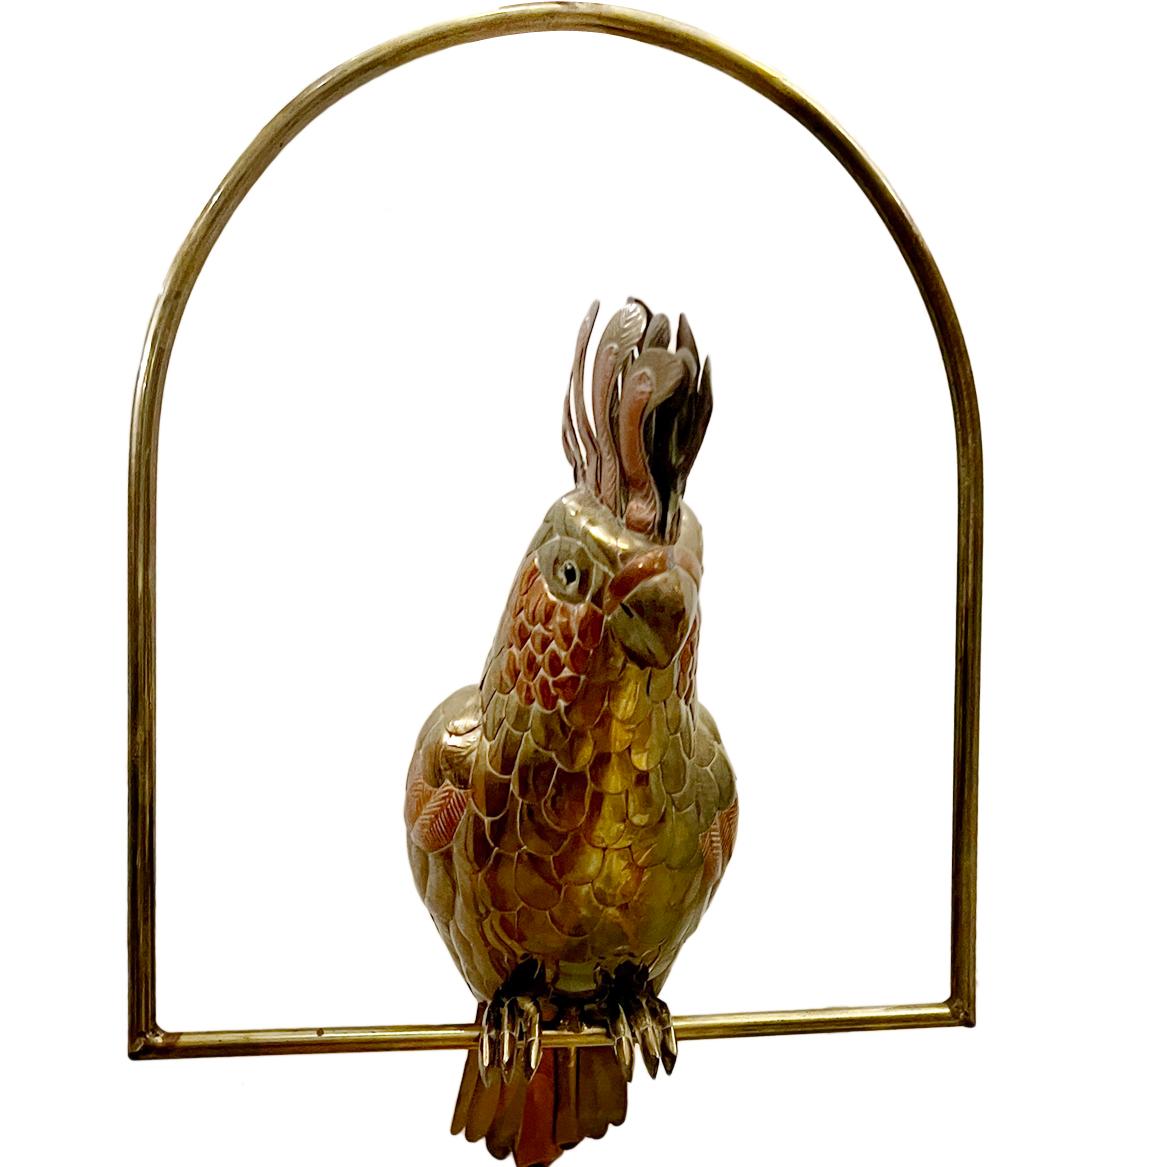 A circa 1960's repoussé brass bird on stand.

Measurements:
Height: 20